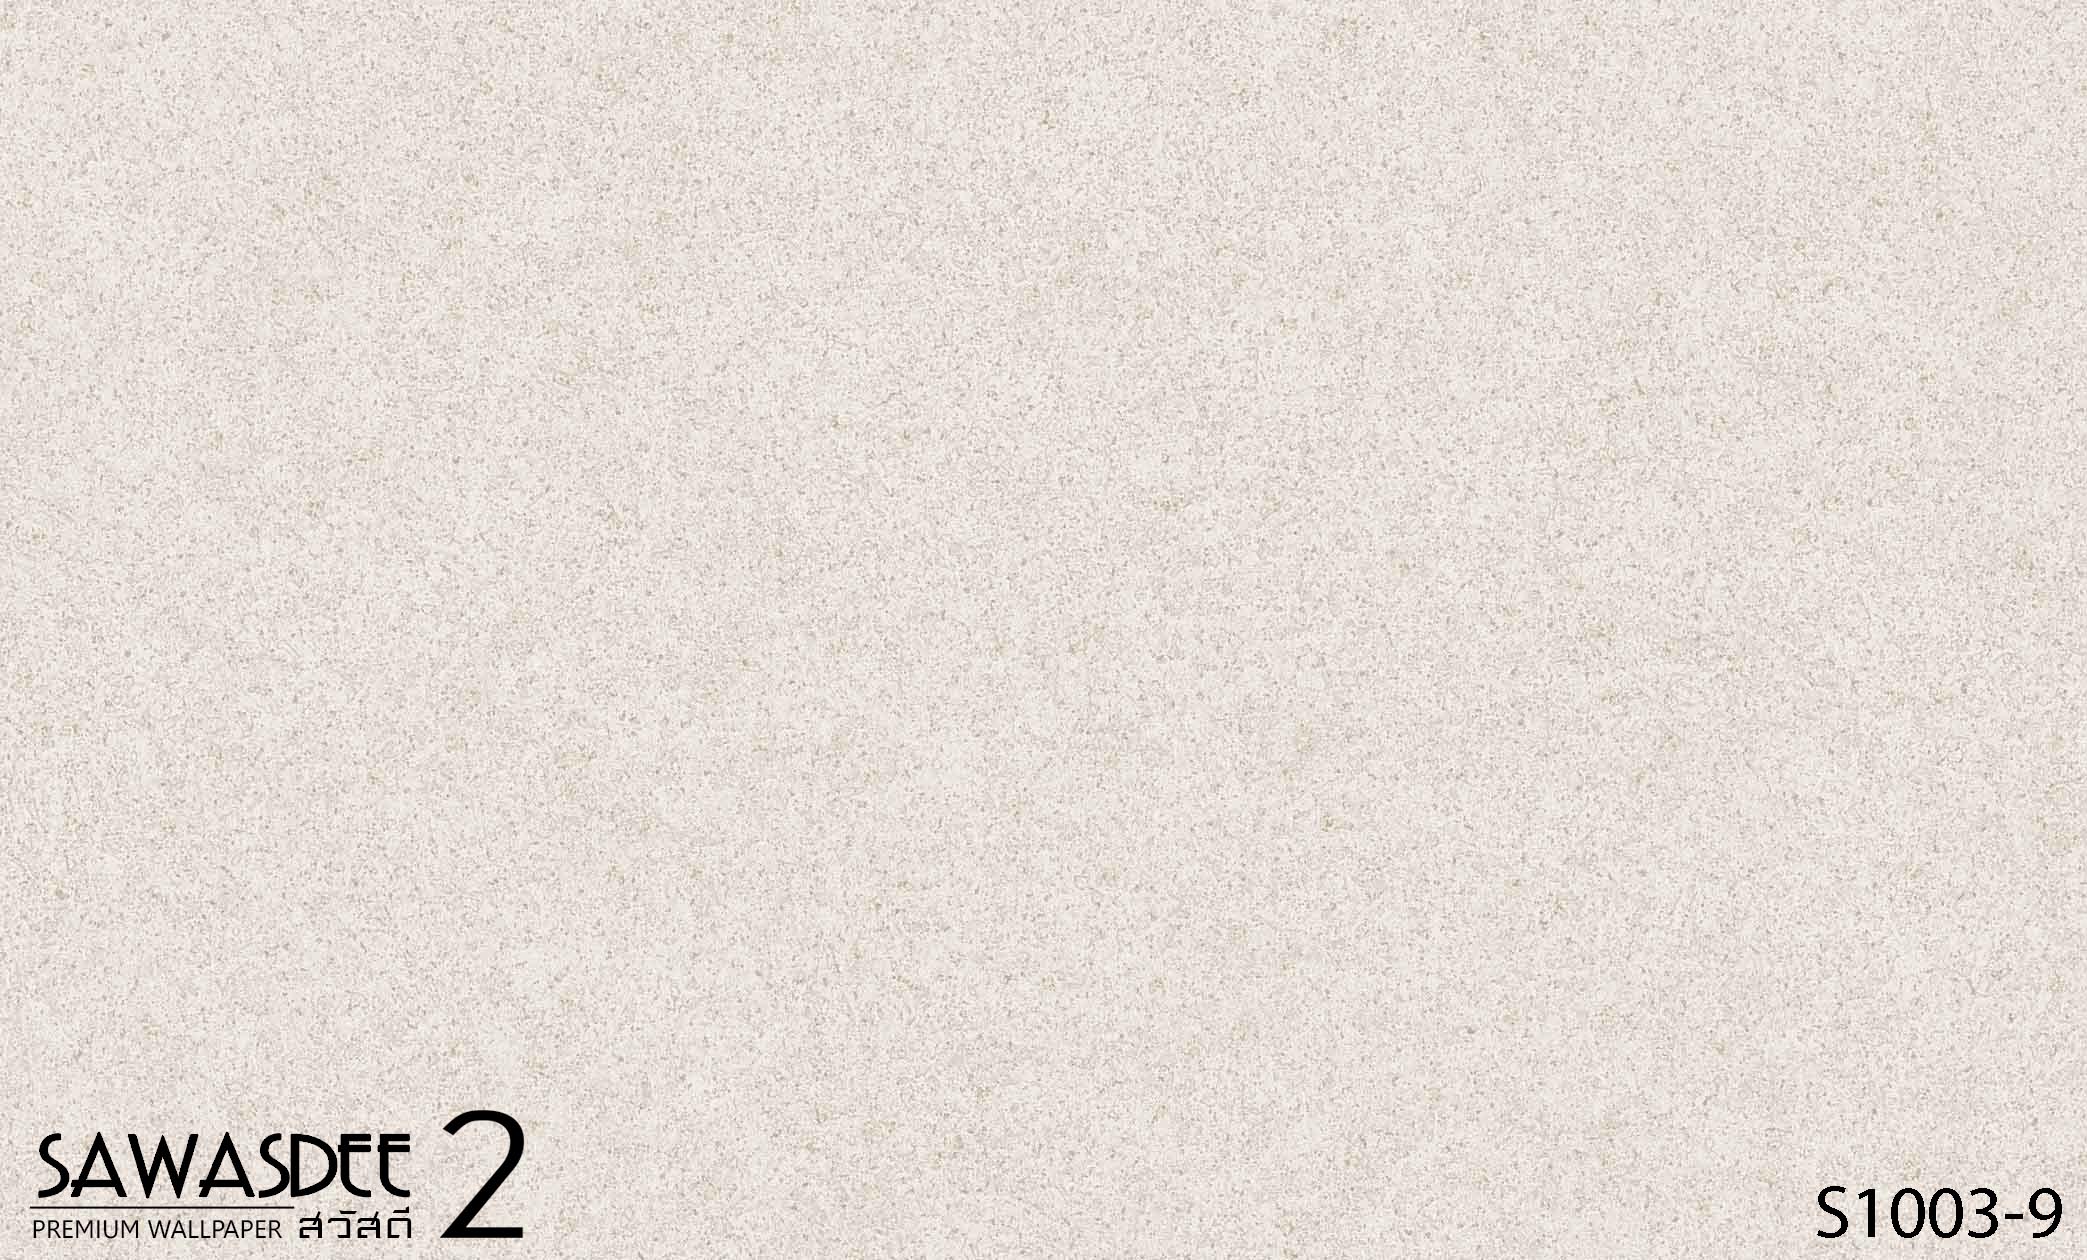 Wallpaper (SAWASDEE 2) S1003-9